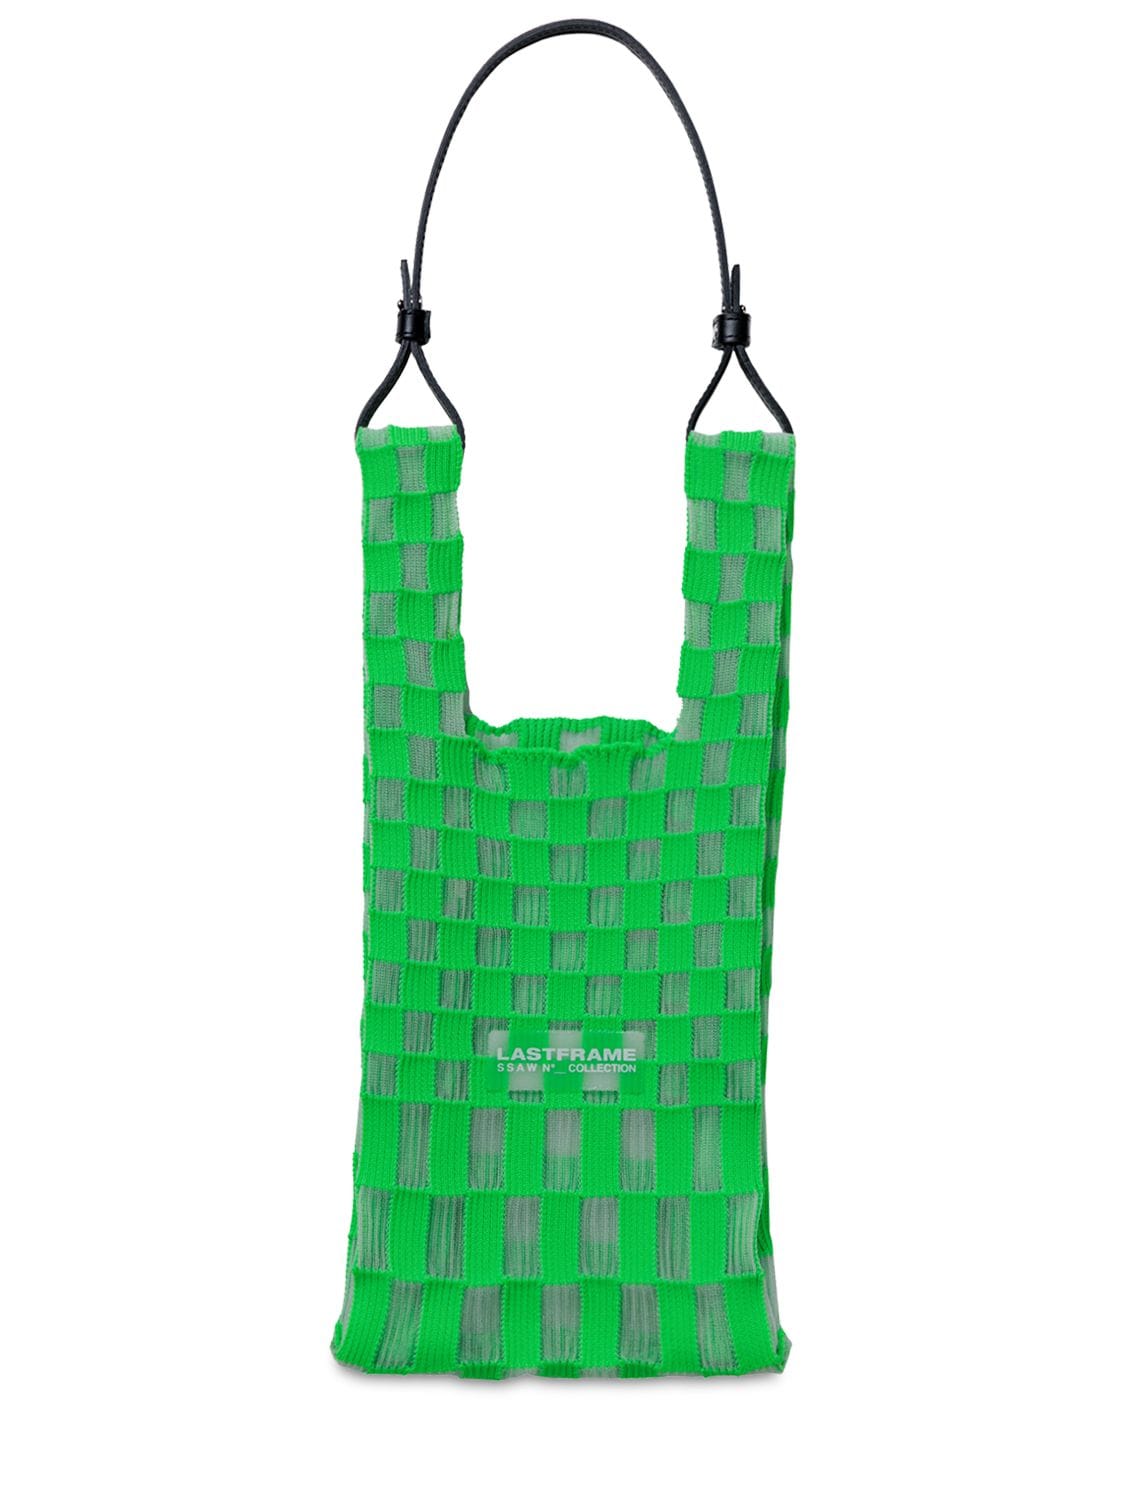 Lastframe Small Sheer Ichimatsu Market Bag In Neon Green | ModeSens